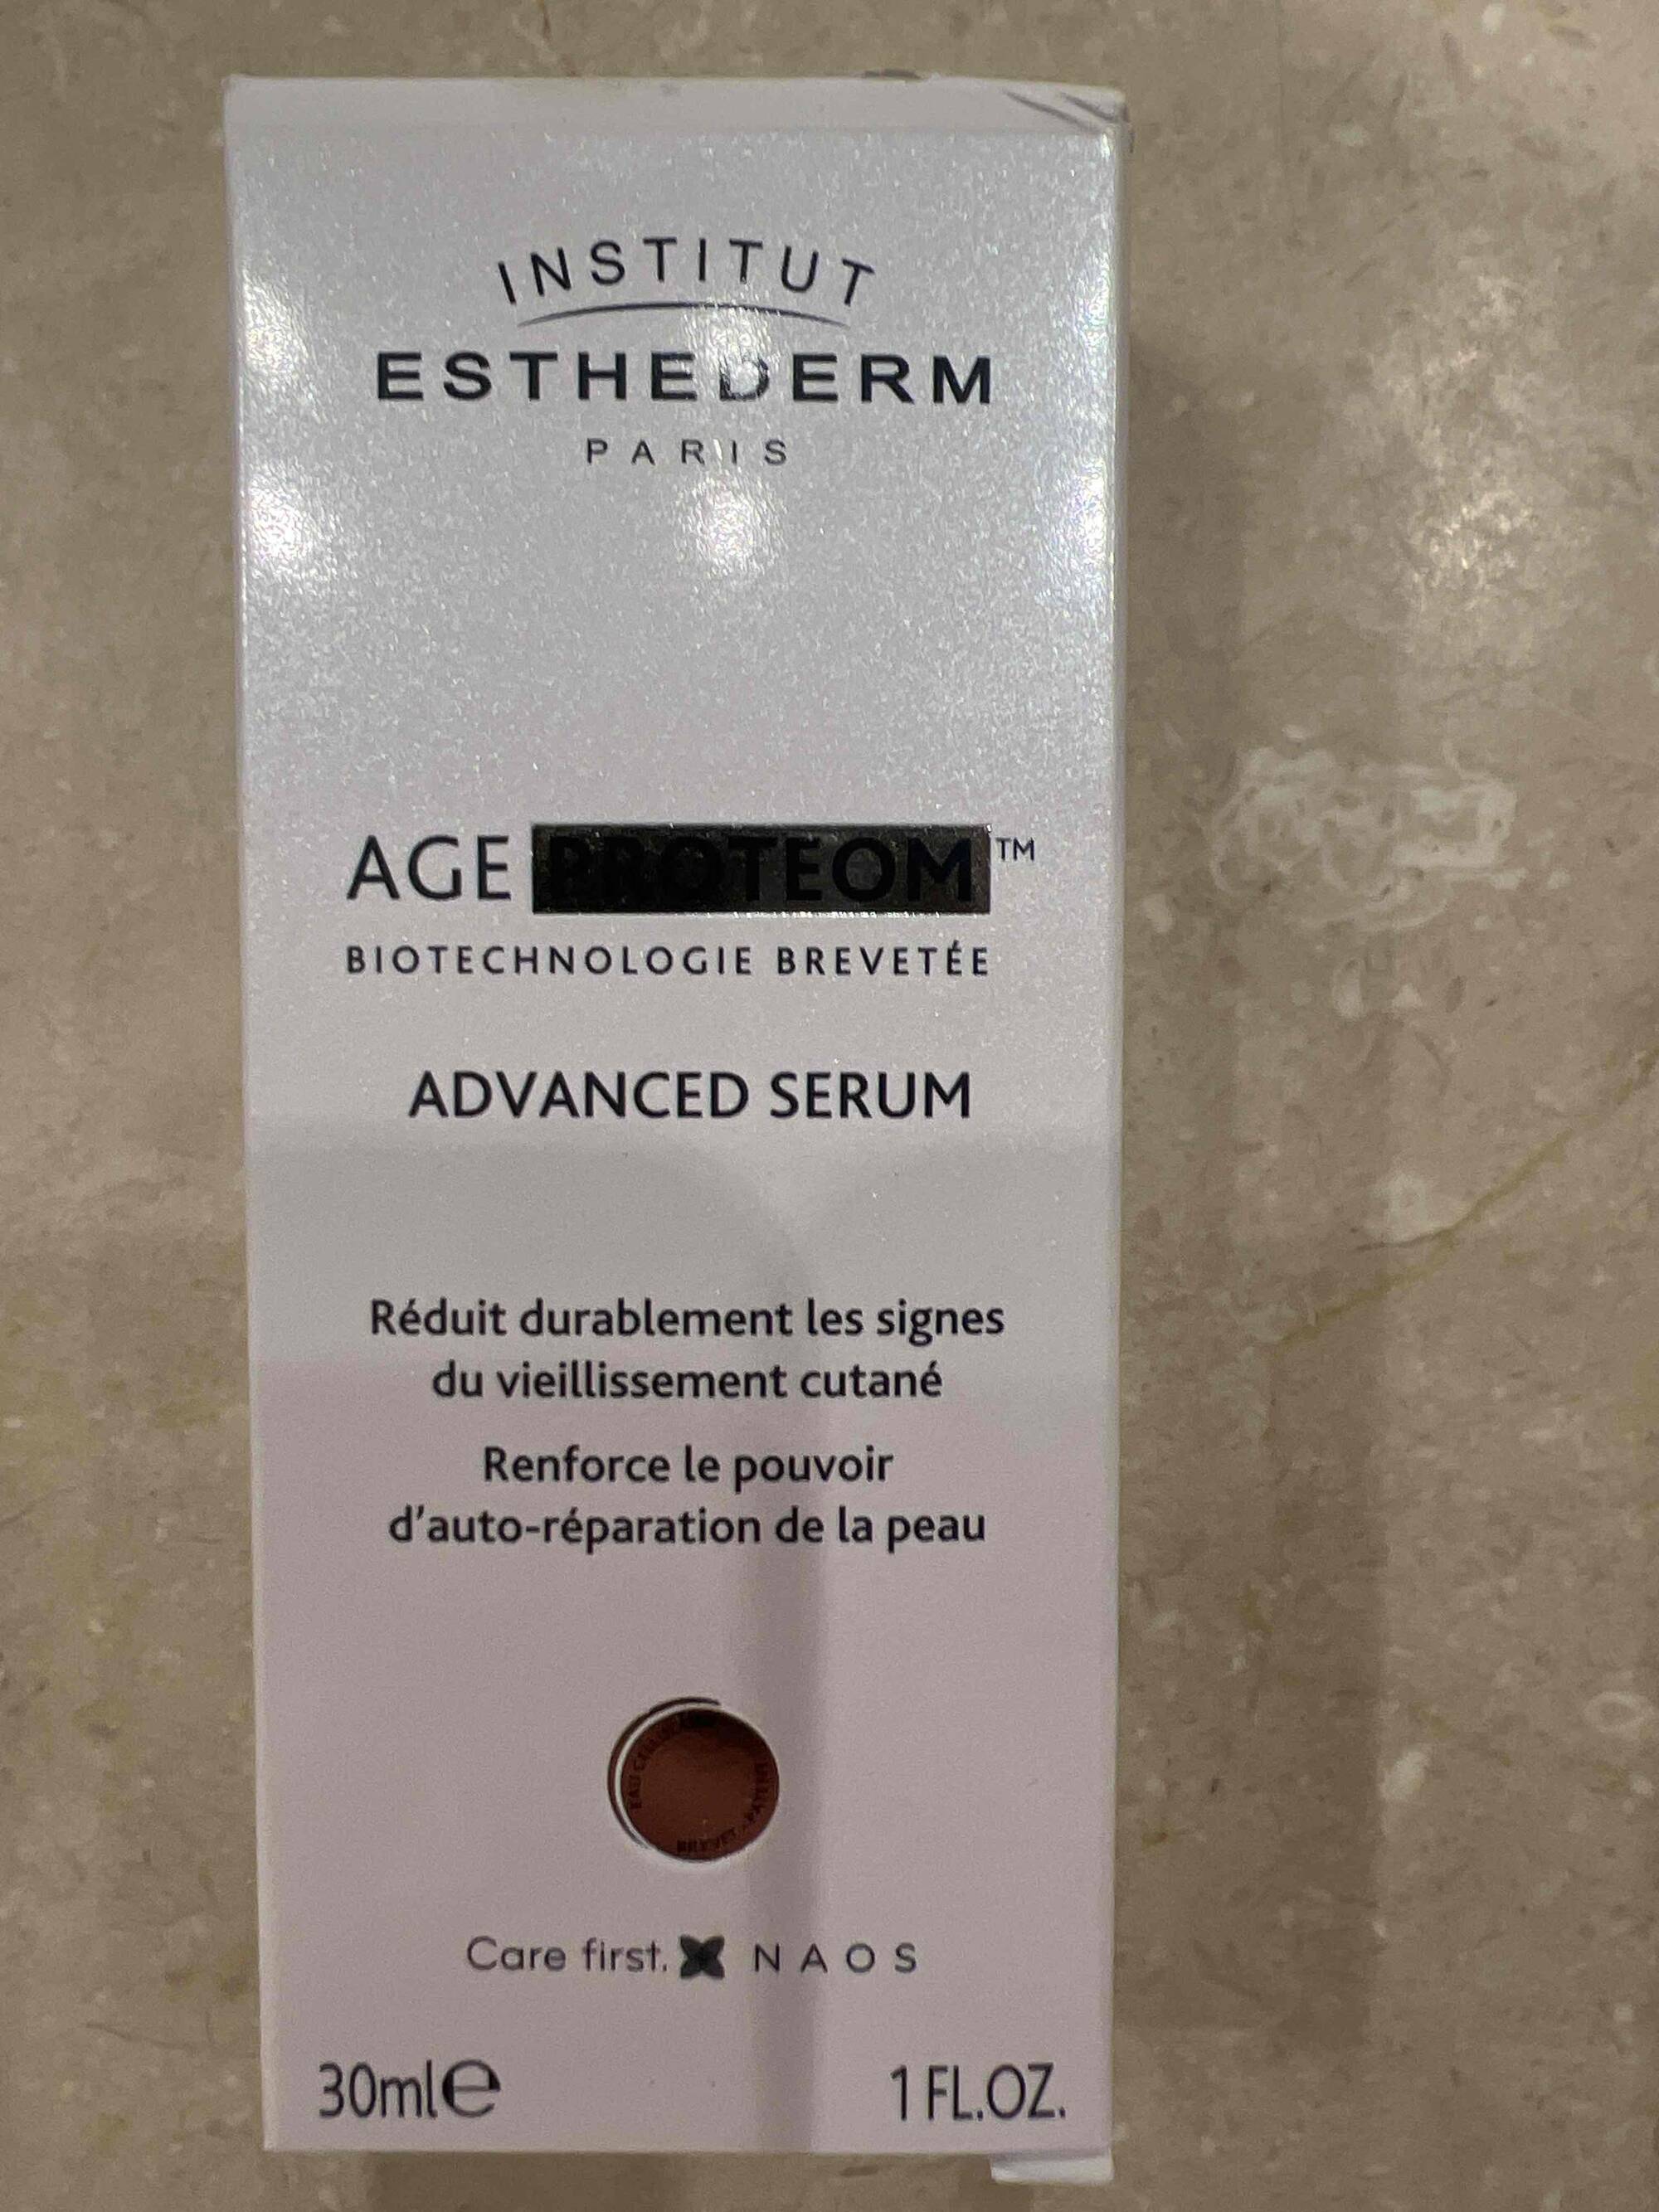 INSTITUT ESTHEDERM - Age proteom - Advenced serum